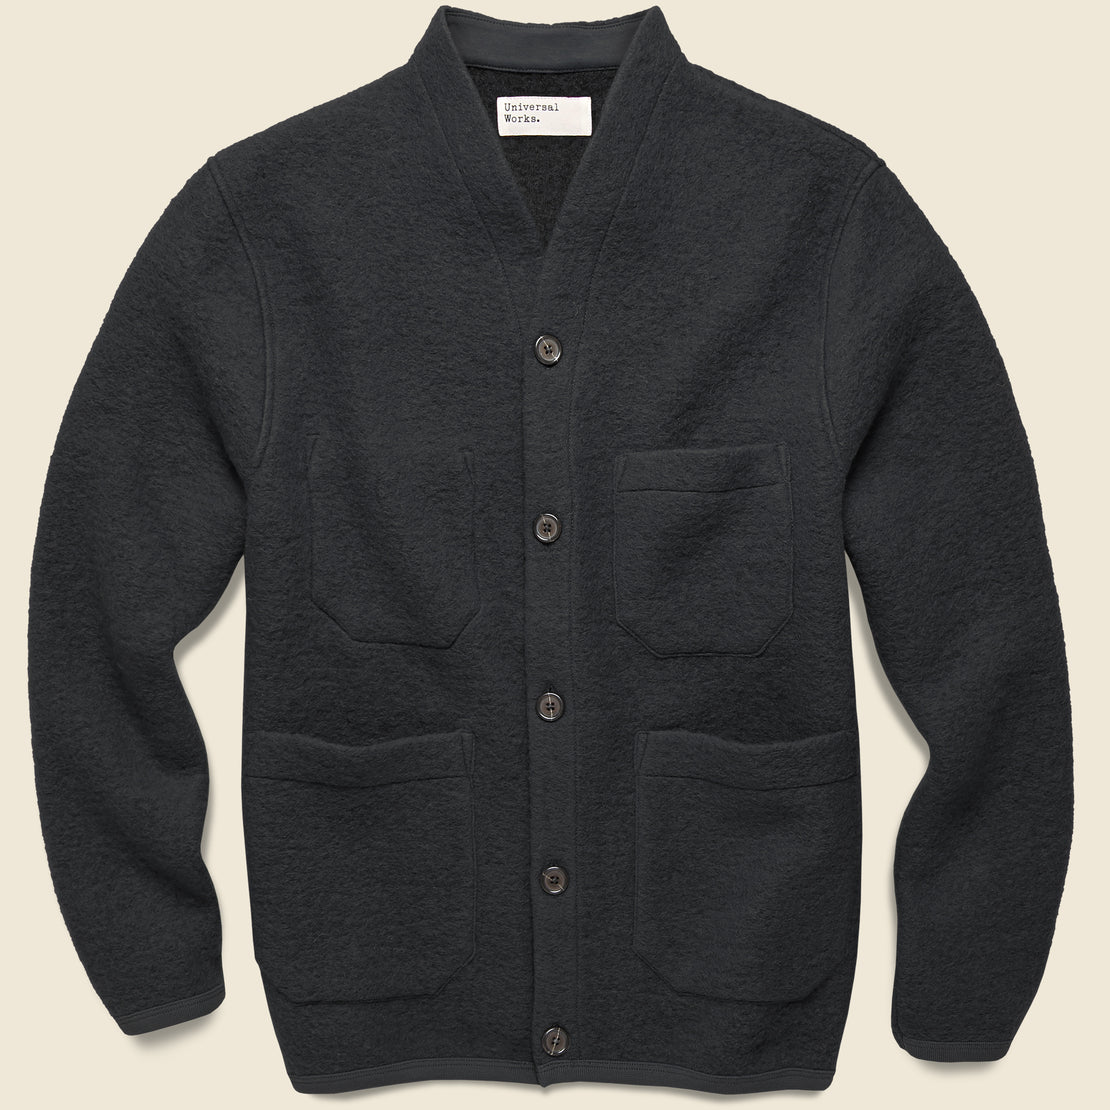 Universal Works Wool Fleece Cardigan - Black